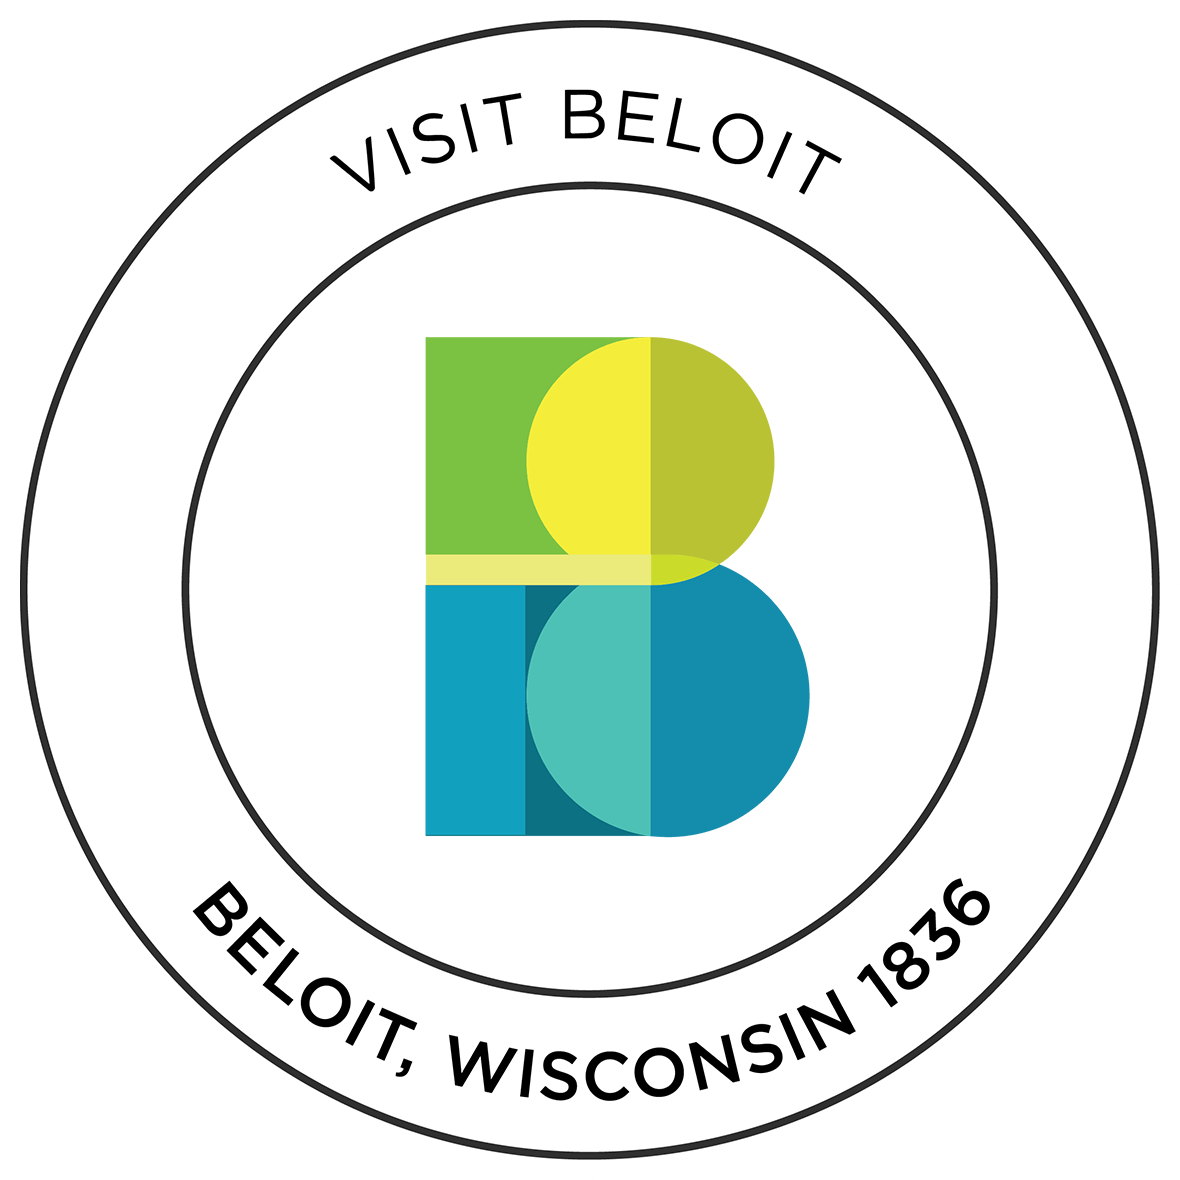 Visit Beloit Logo.png